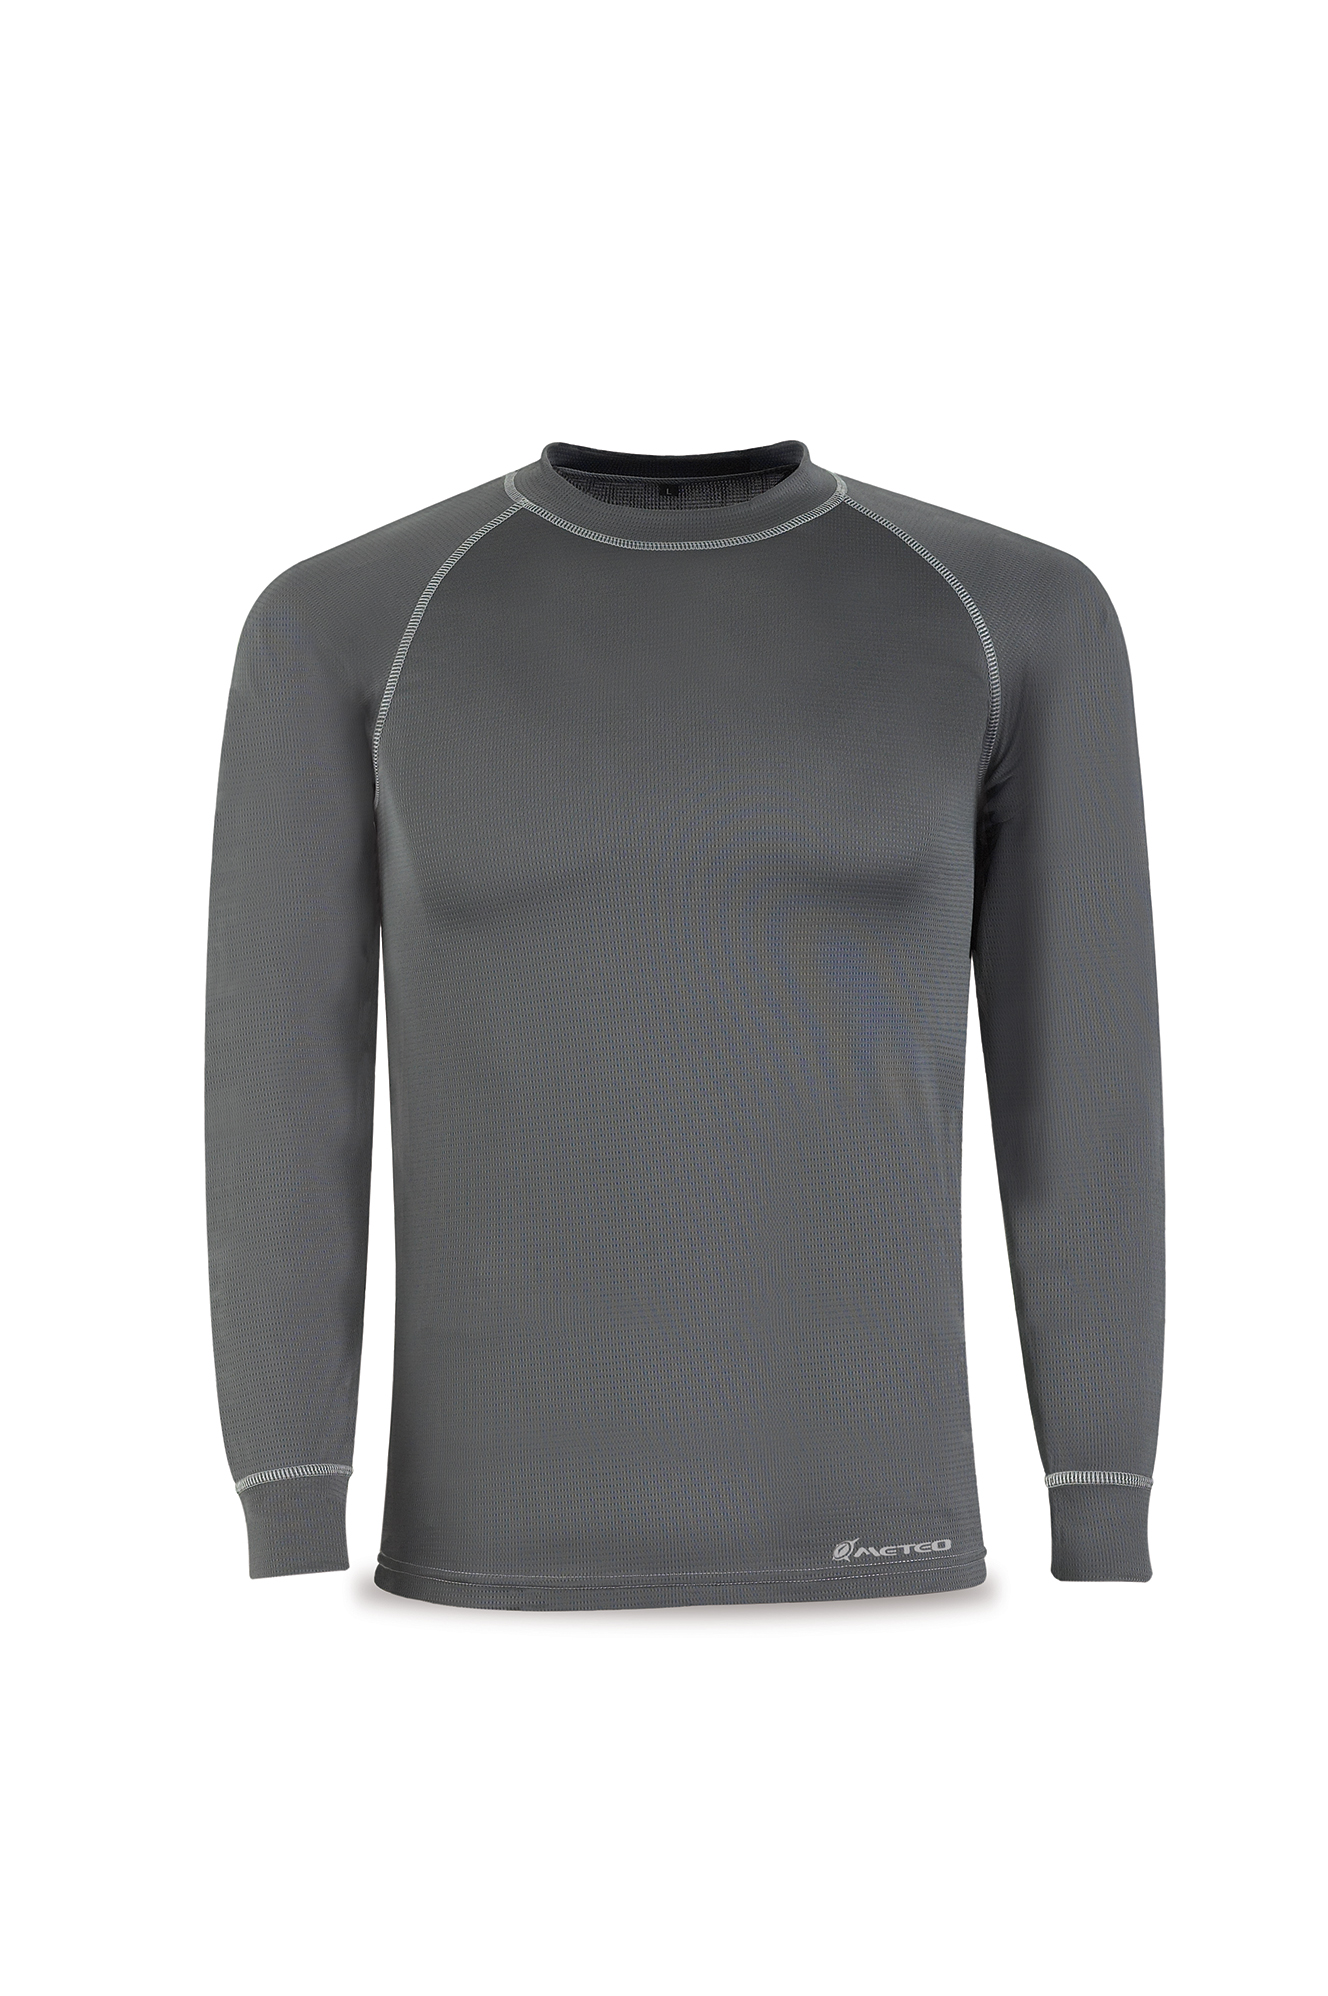 288-FLS Abrigo y lluvia Vestuario térmico 1ª capa Camiseta Oxford/gris melange.